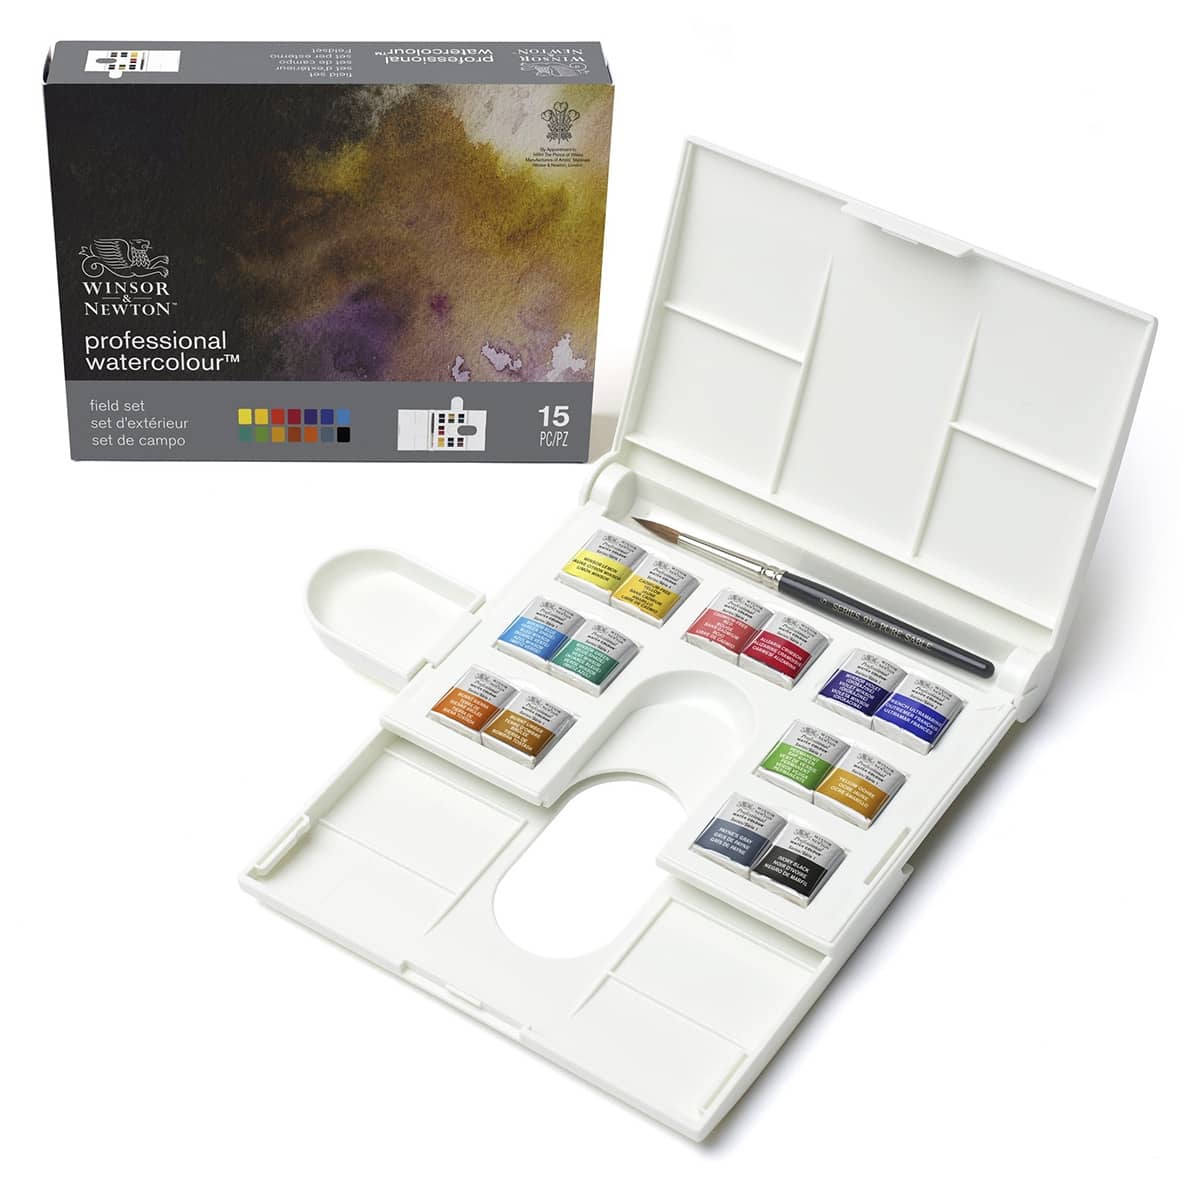 Winsor & Newton Professional Watercolour Compact Set